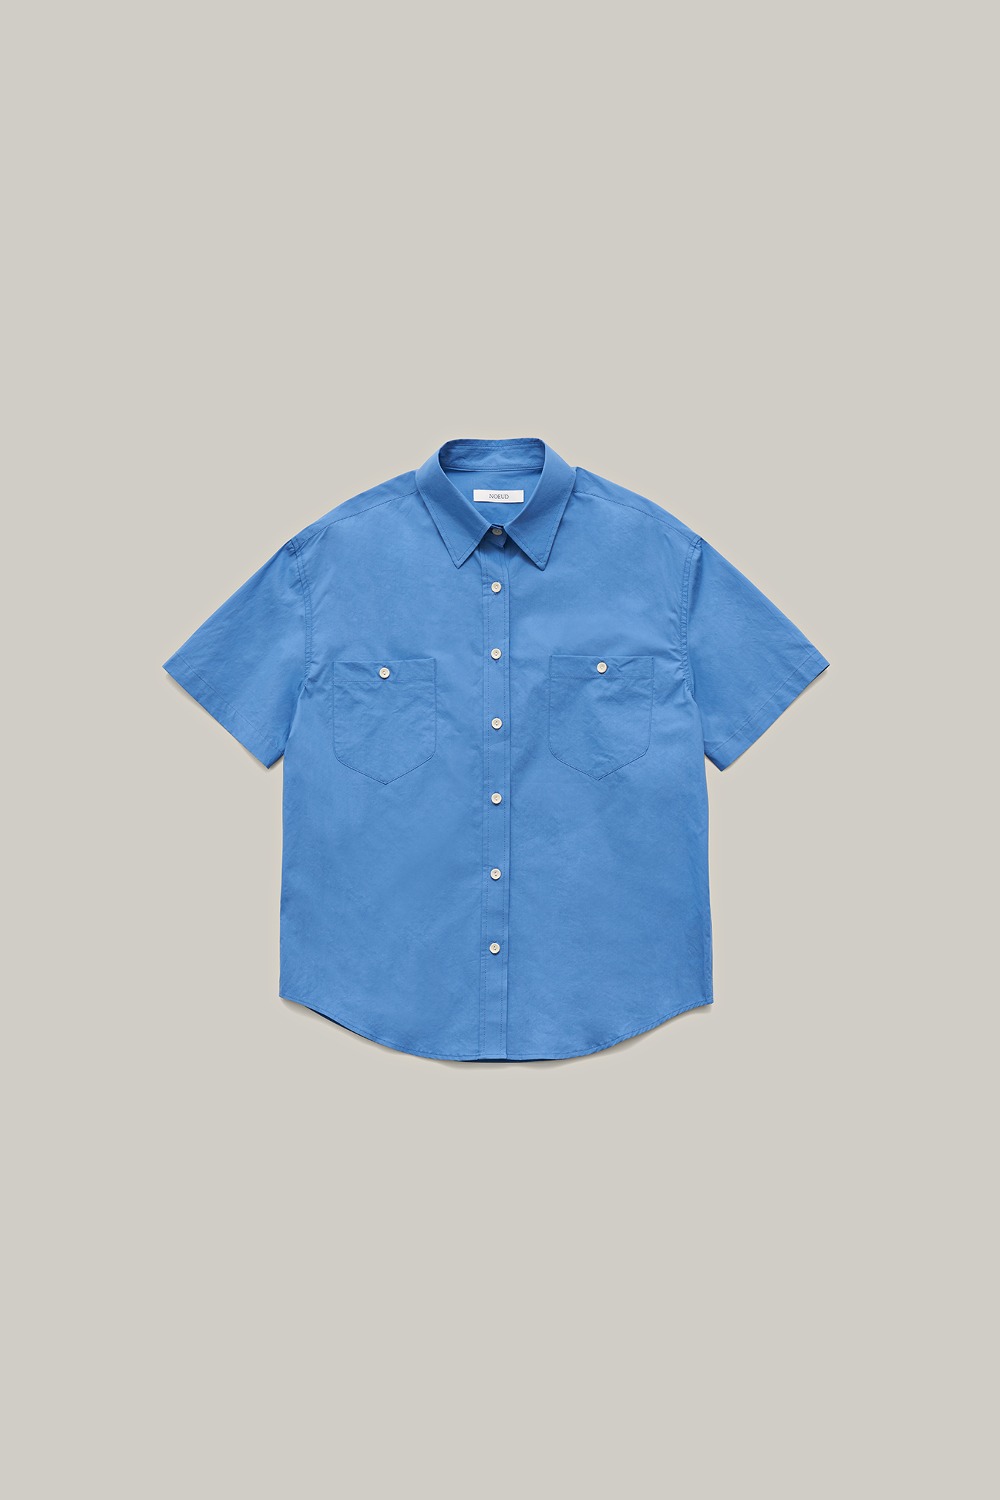 5th/Pocket cotton shirt (Blue)